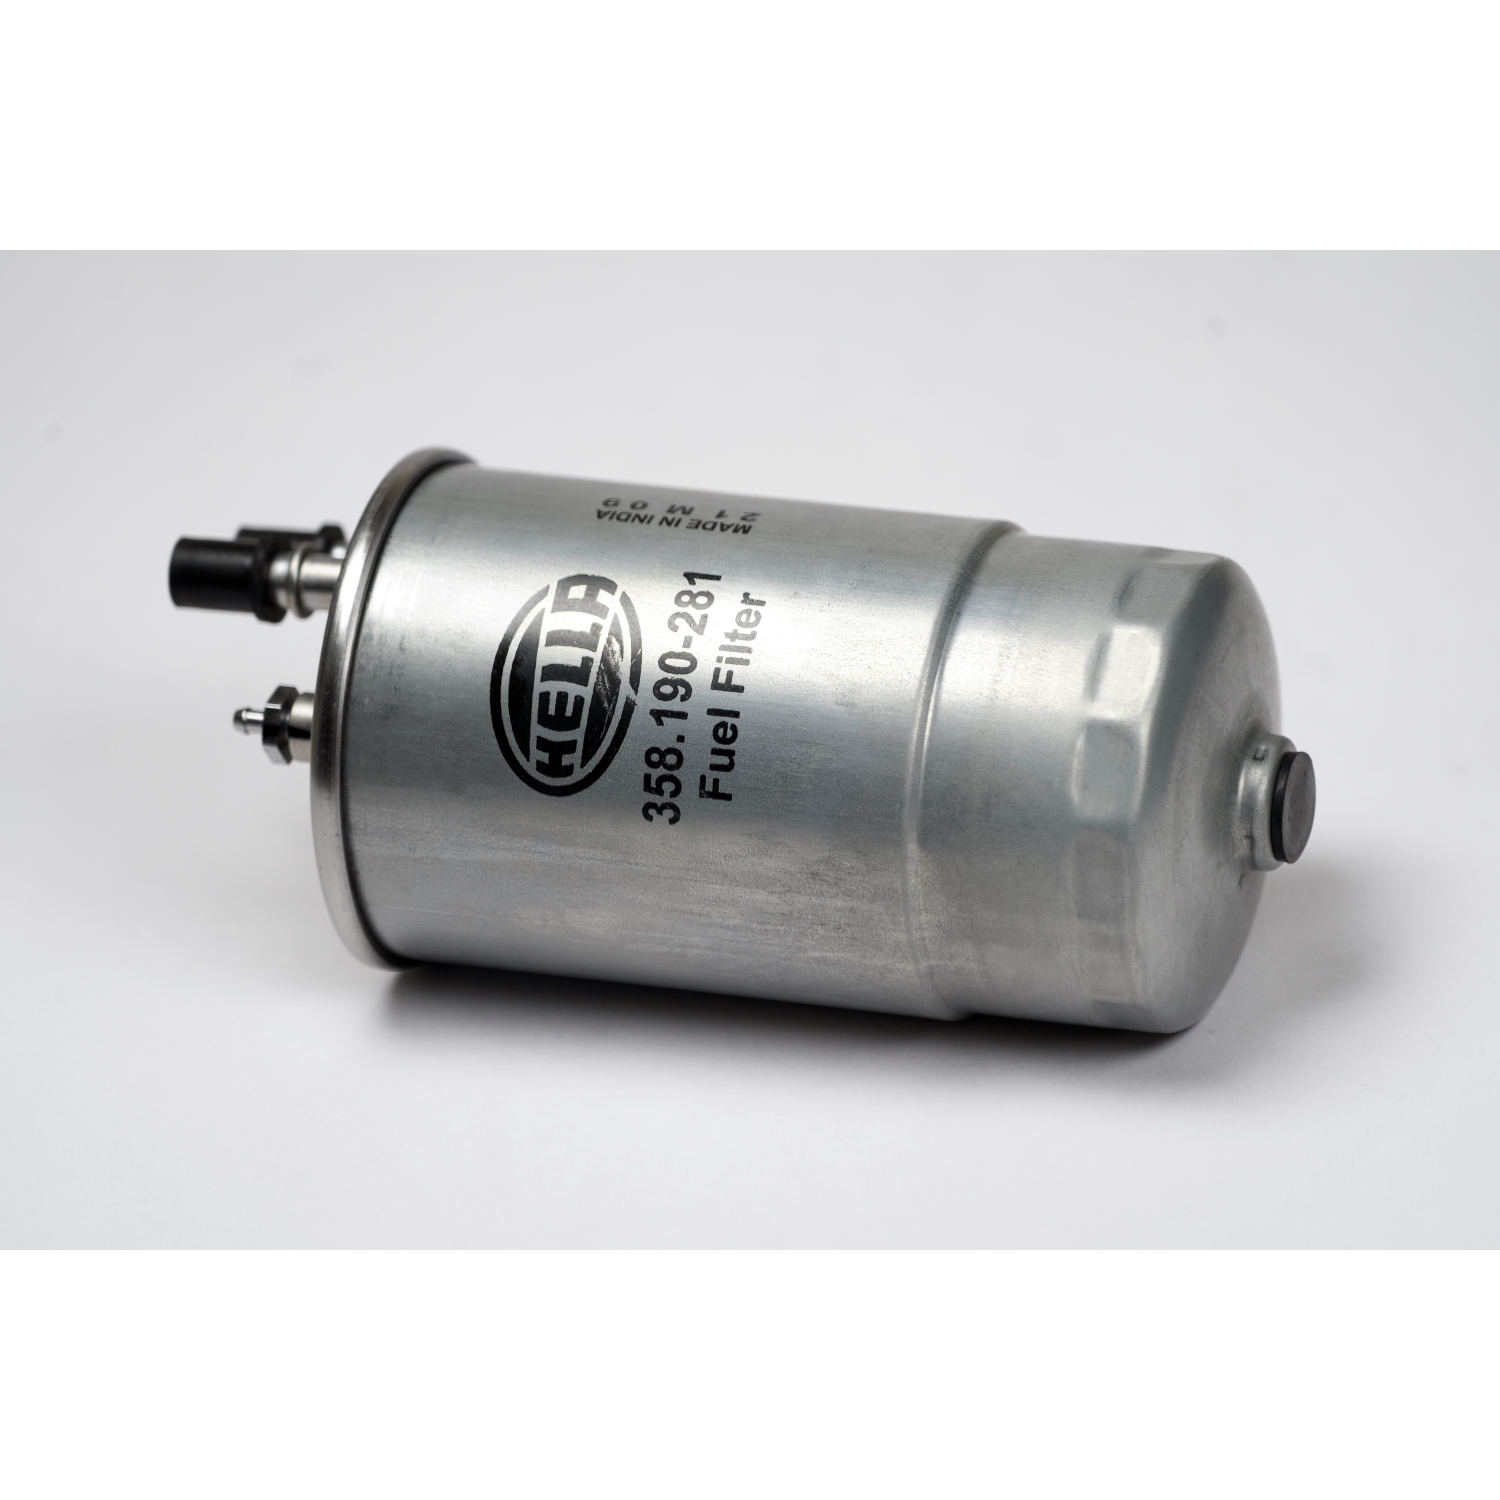 HELLA Fuel Filter for TATA Indica Vista Indica Manza Fiat Linia Diesel  570309110110 358190281